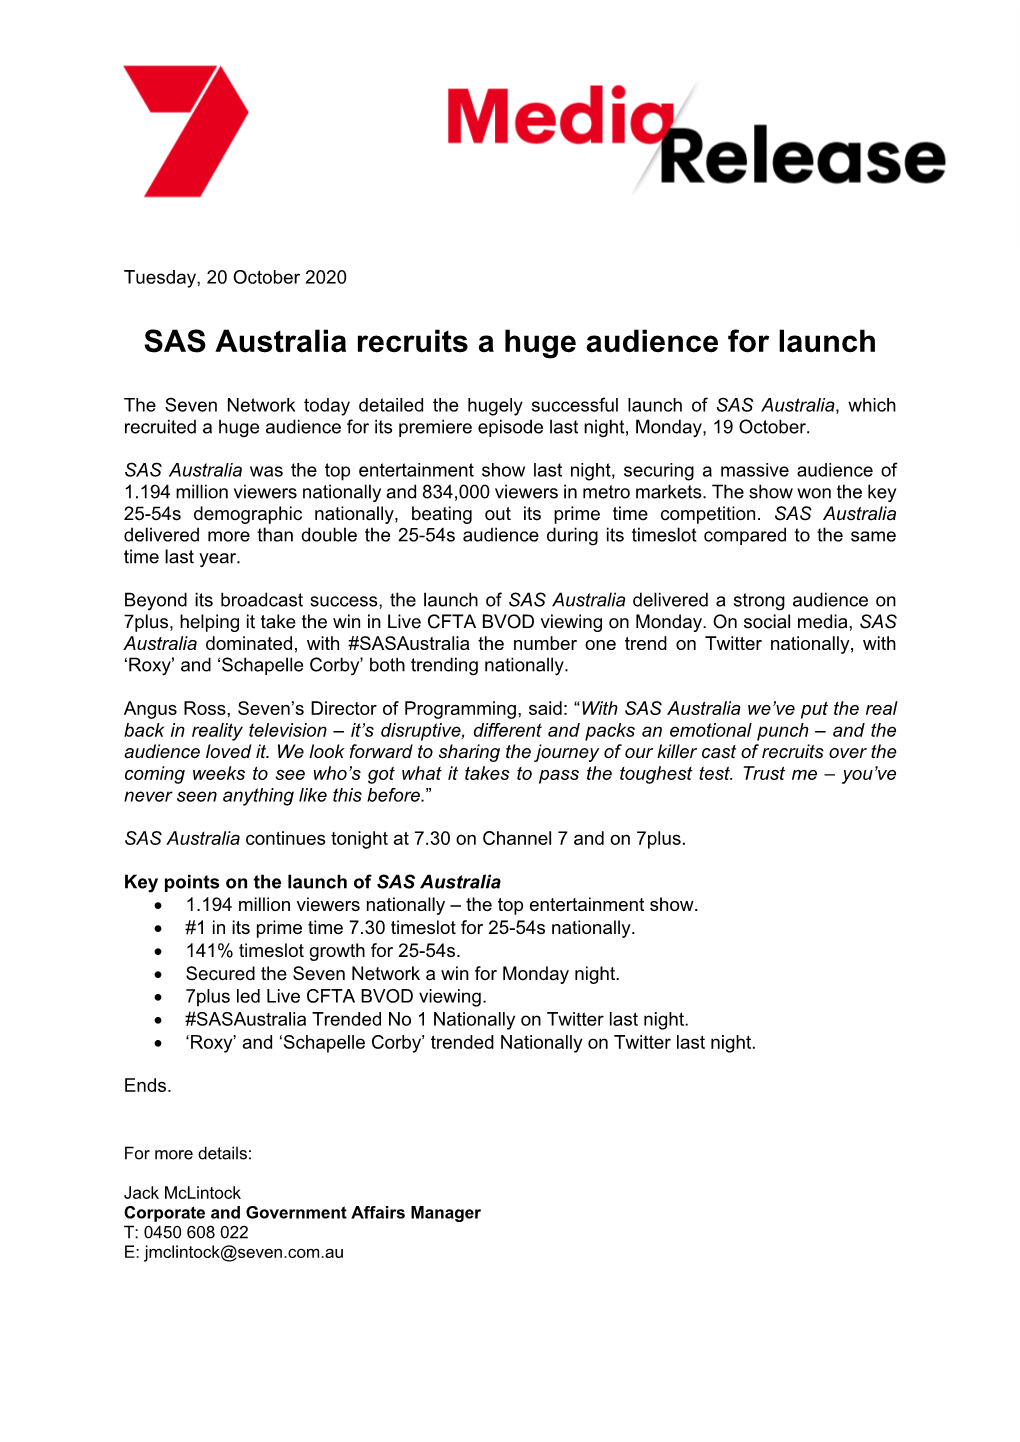 SAS Australia Recruits a Huge Audience for Launch